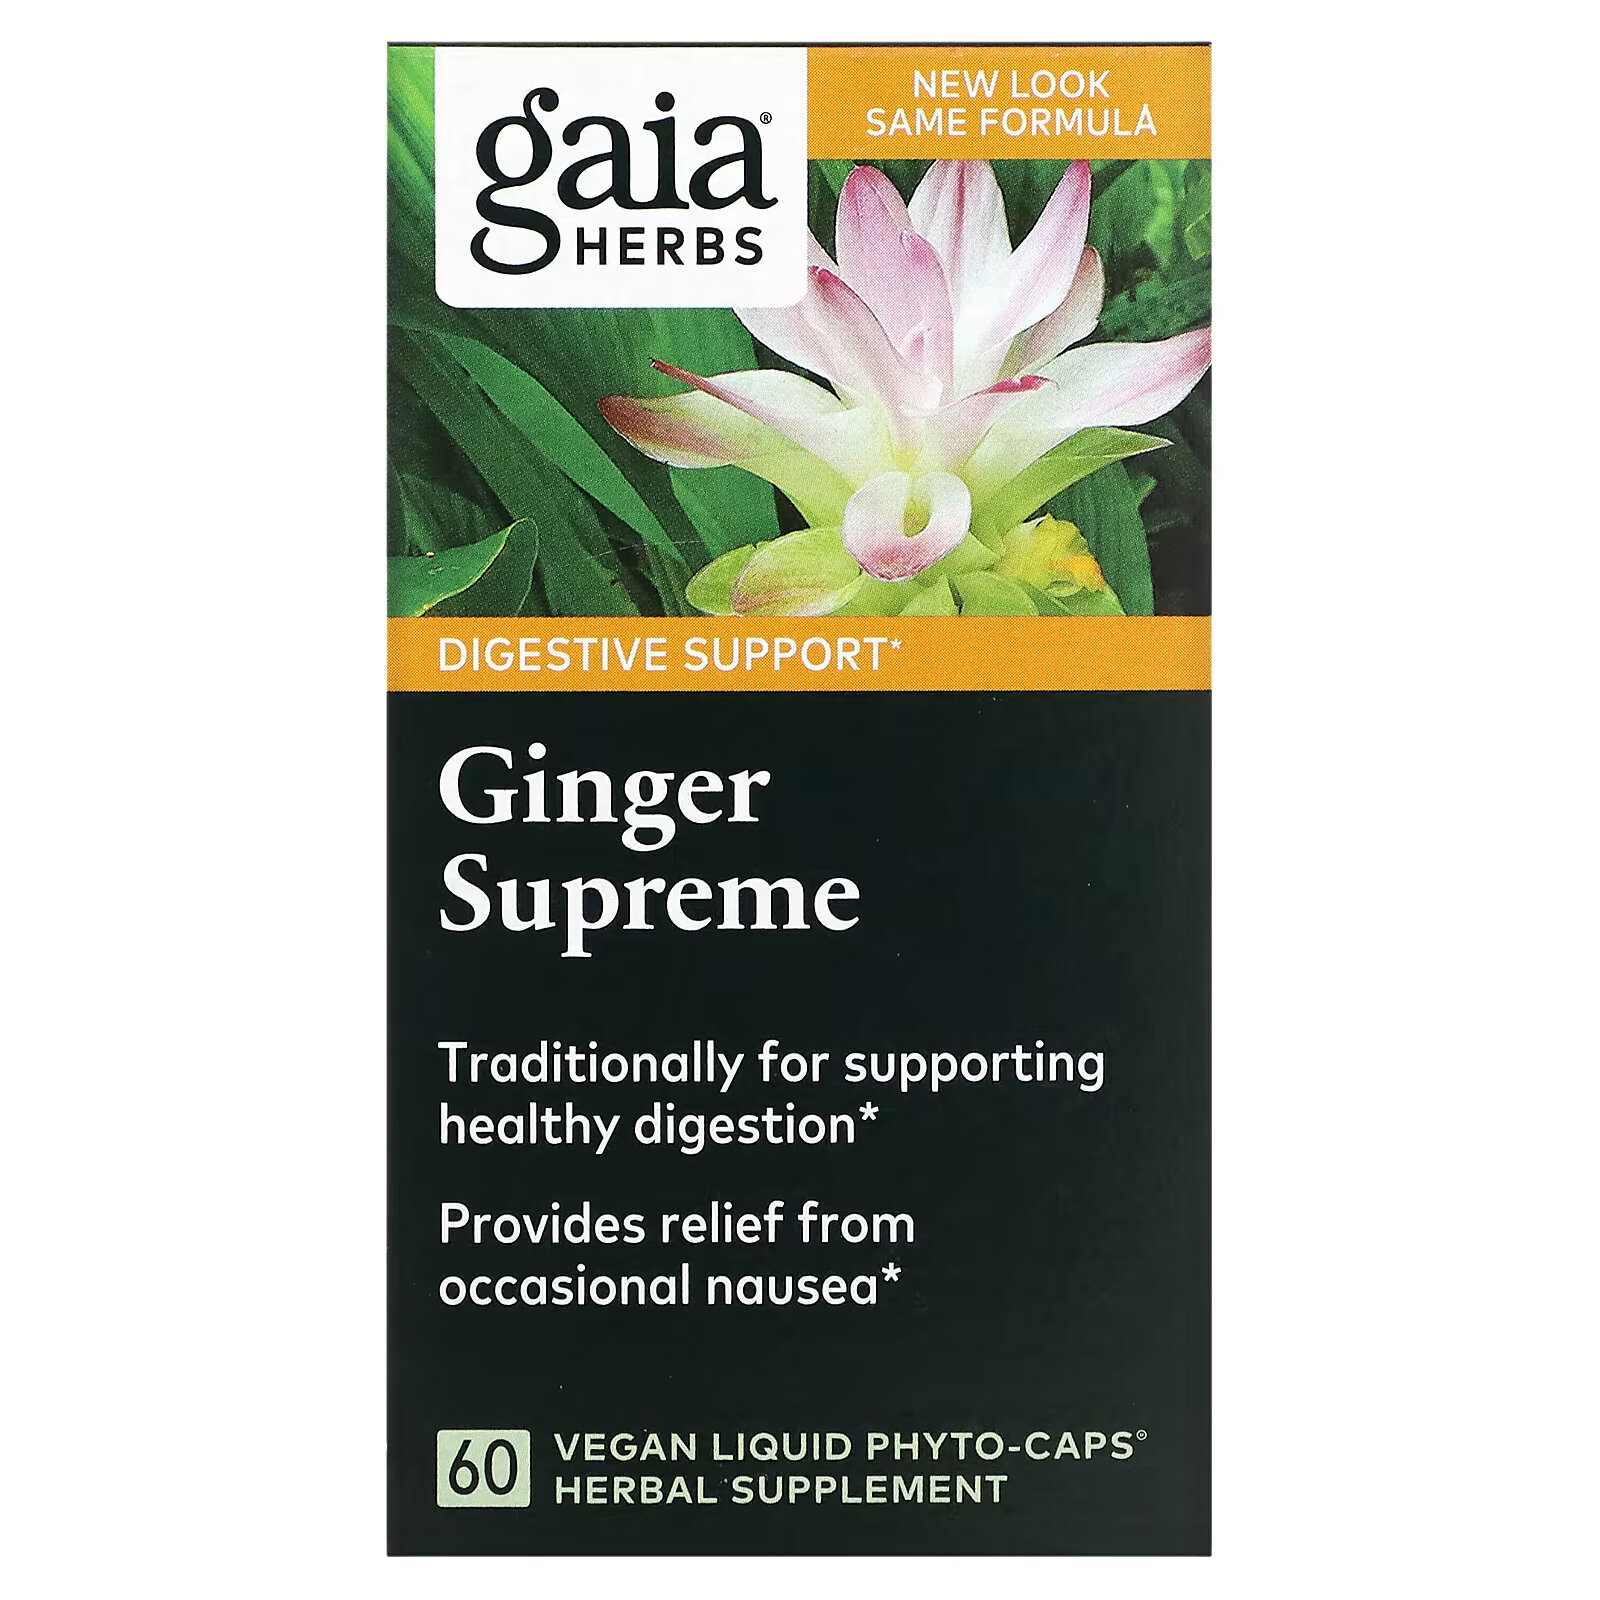 Gaia Herbs, Ginger Supreme, 60 веганских жидких фито-капсул gaia herbs ginger supreme 60 веганских жидких фито капсул